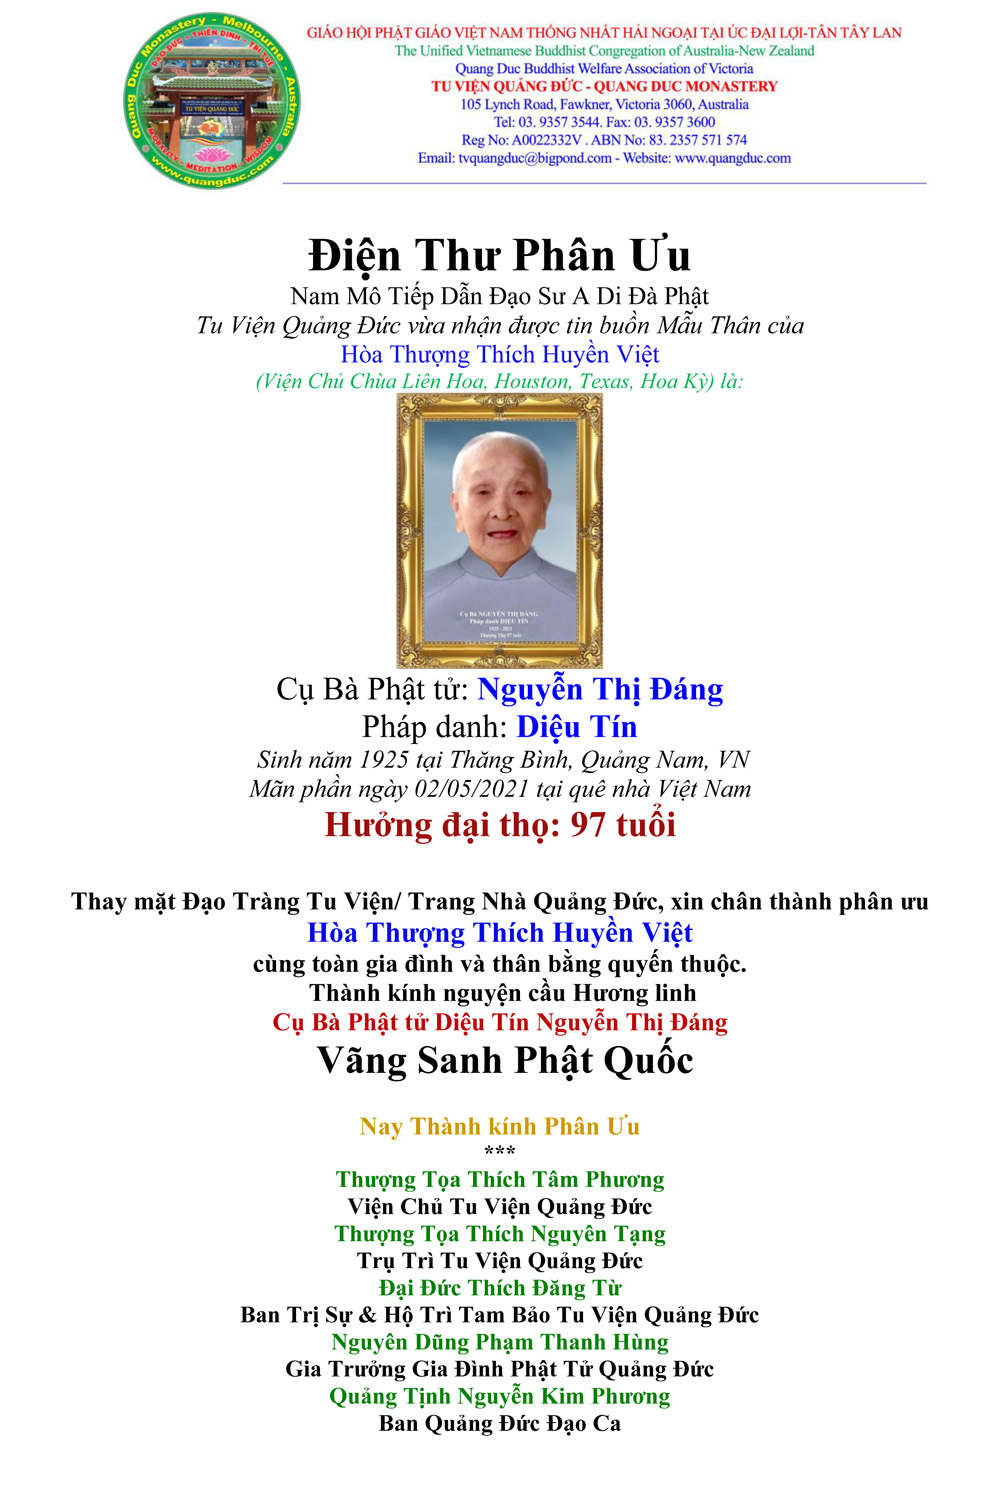 Dien Thu Phan Uu_Gia Dinh HT Thich Huyen Viet-1